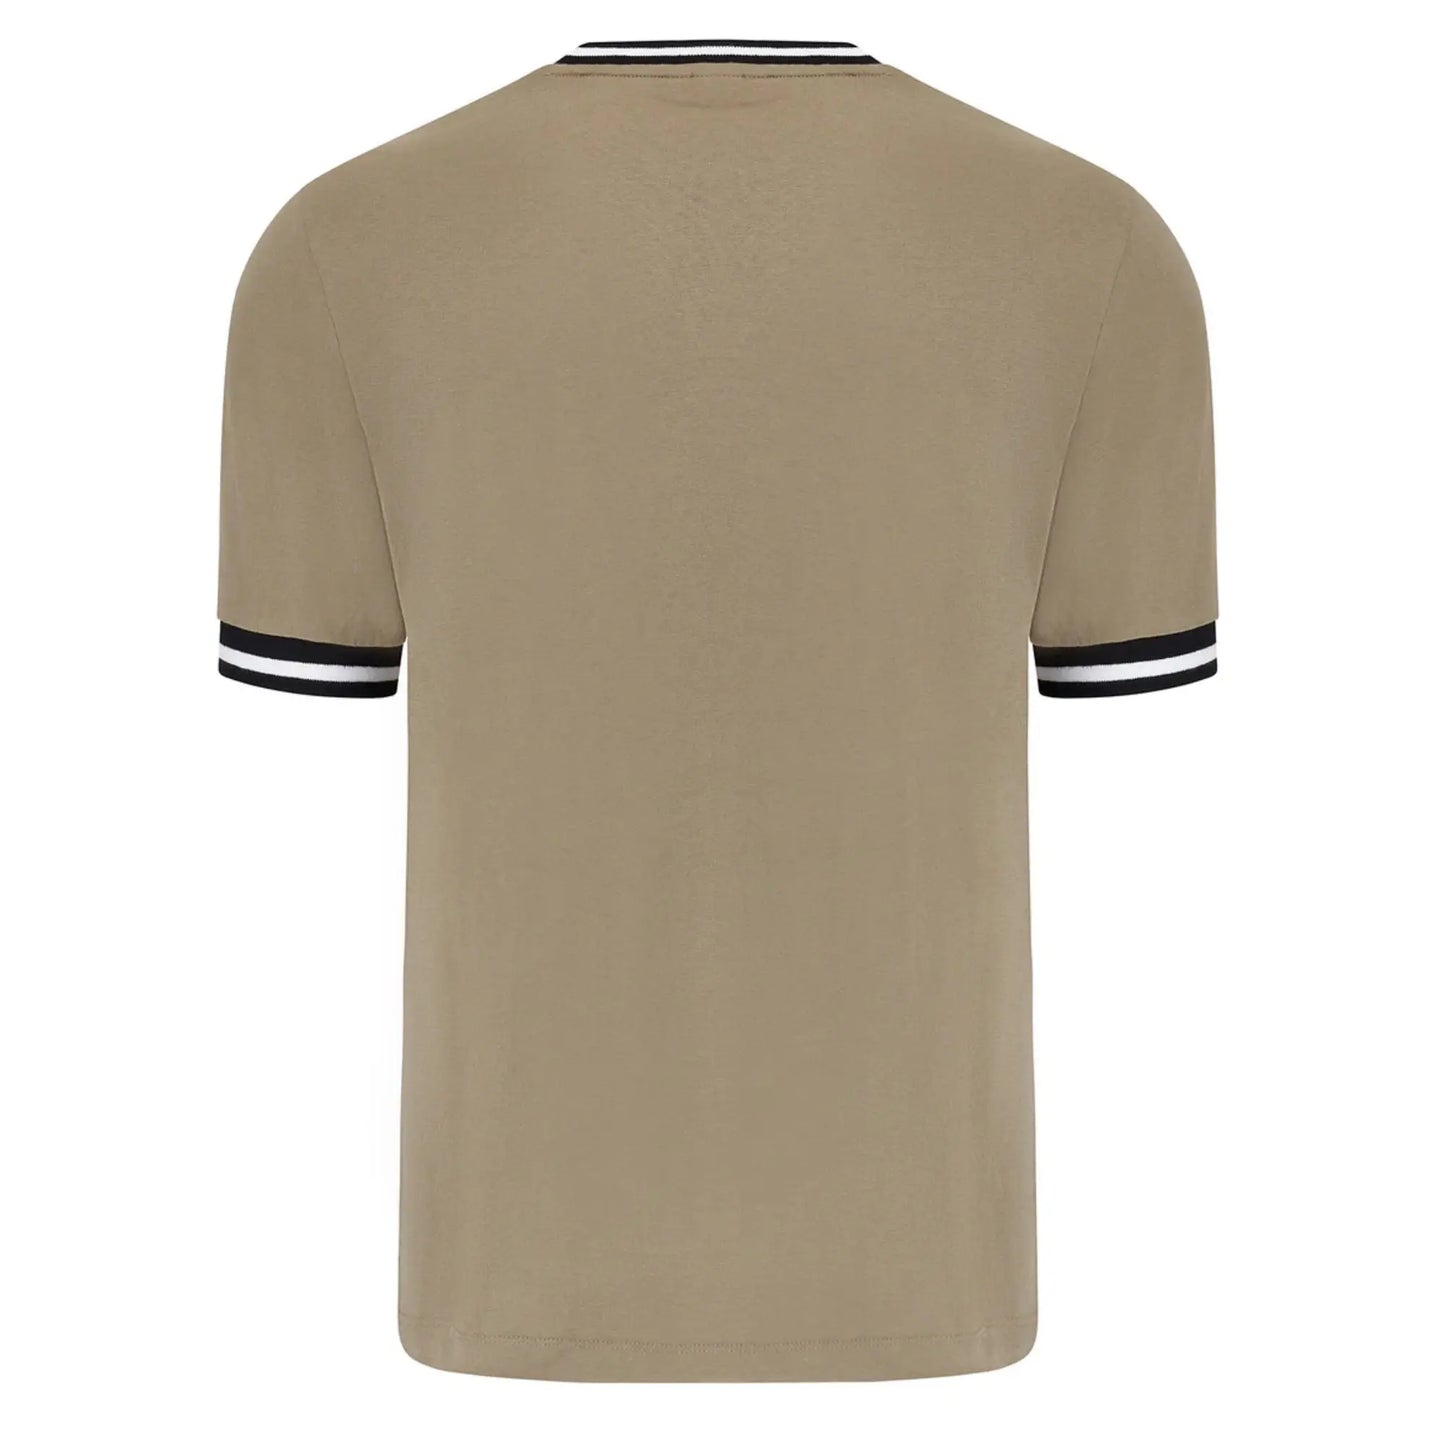 Buy Merc London Redbridge Crew Neck T-Shirt - Olive | T-Shirtss at Woven Durham